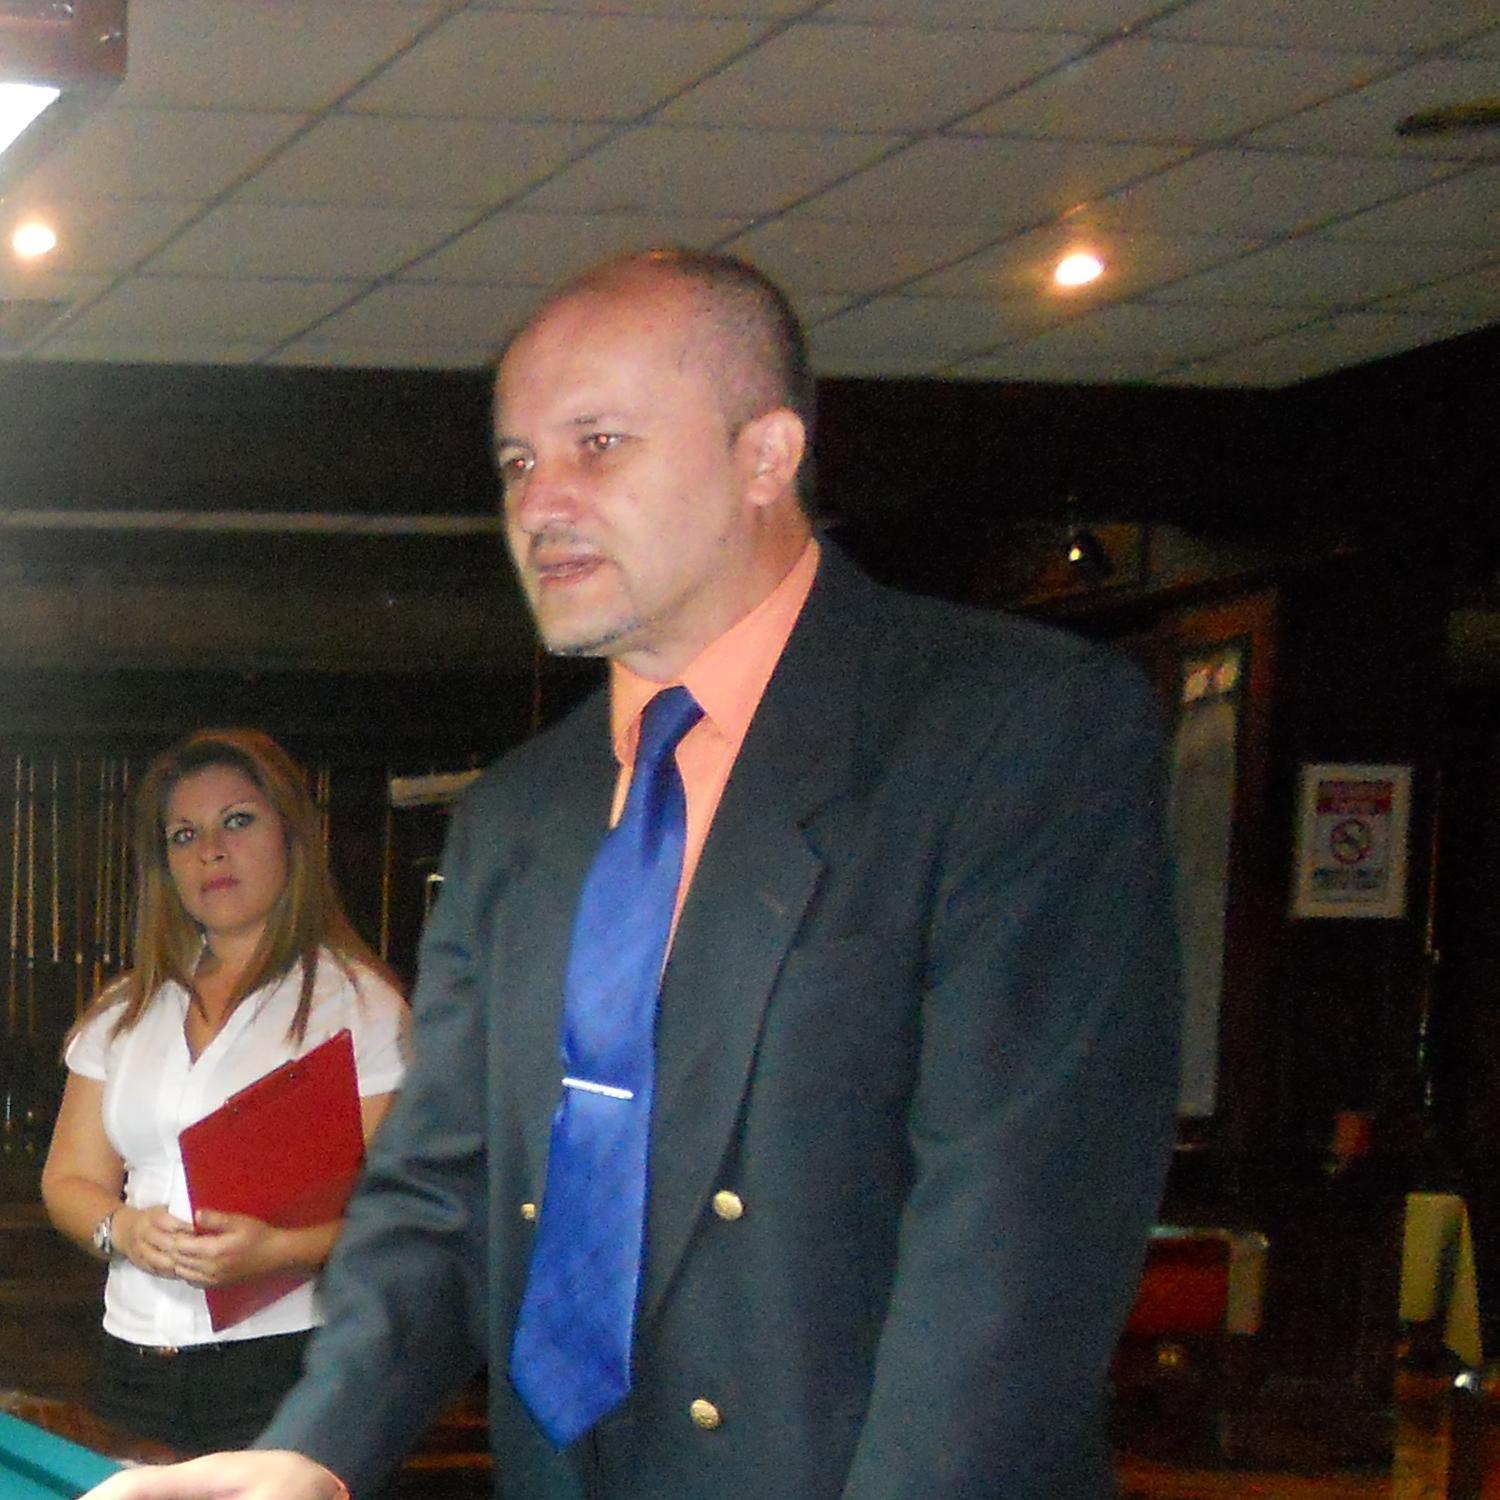 Director del Snooker para Latinoamérica por PABSA!
Presidente Liga Panamericana de Billar!